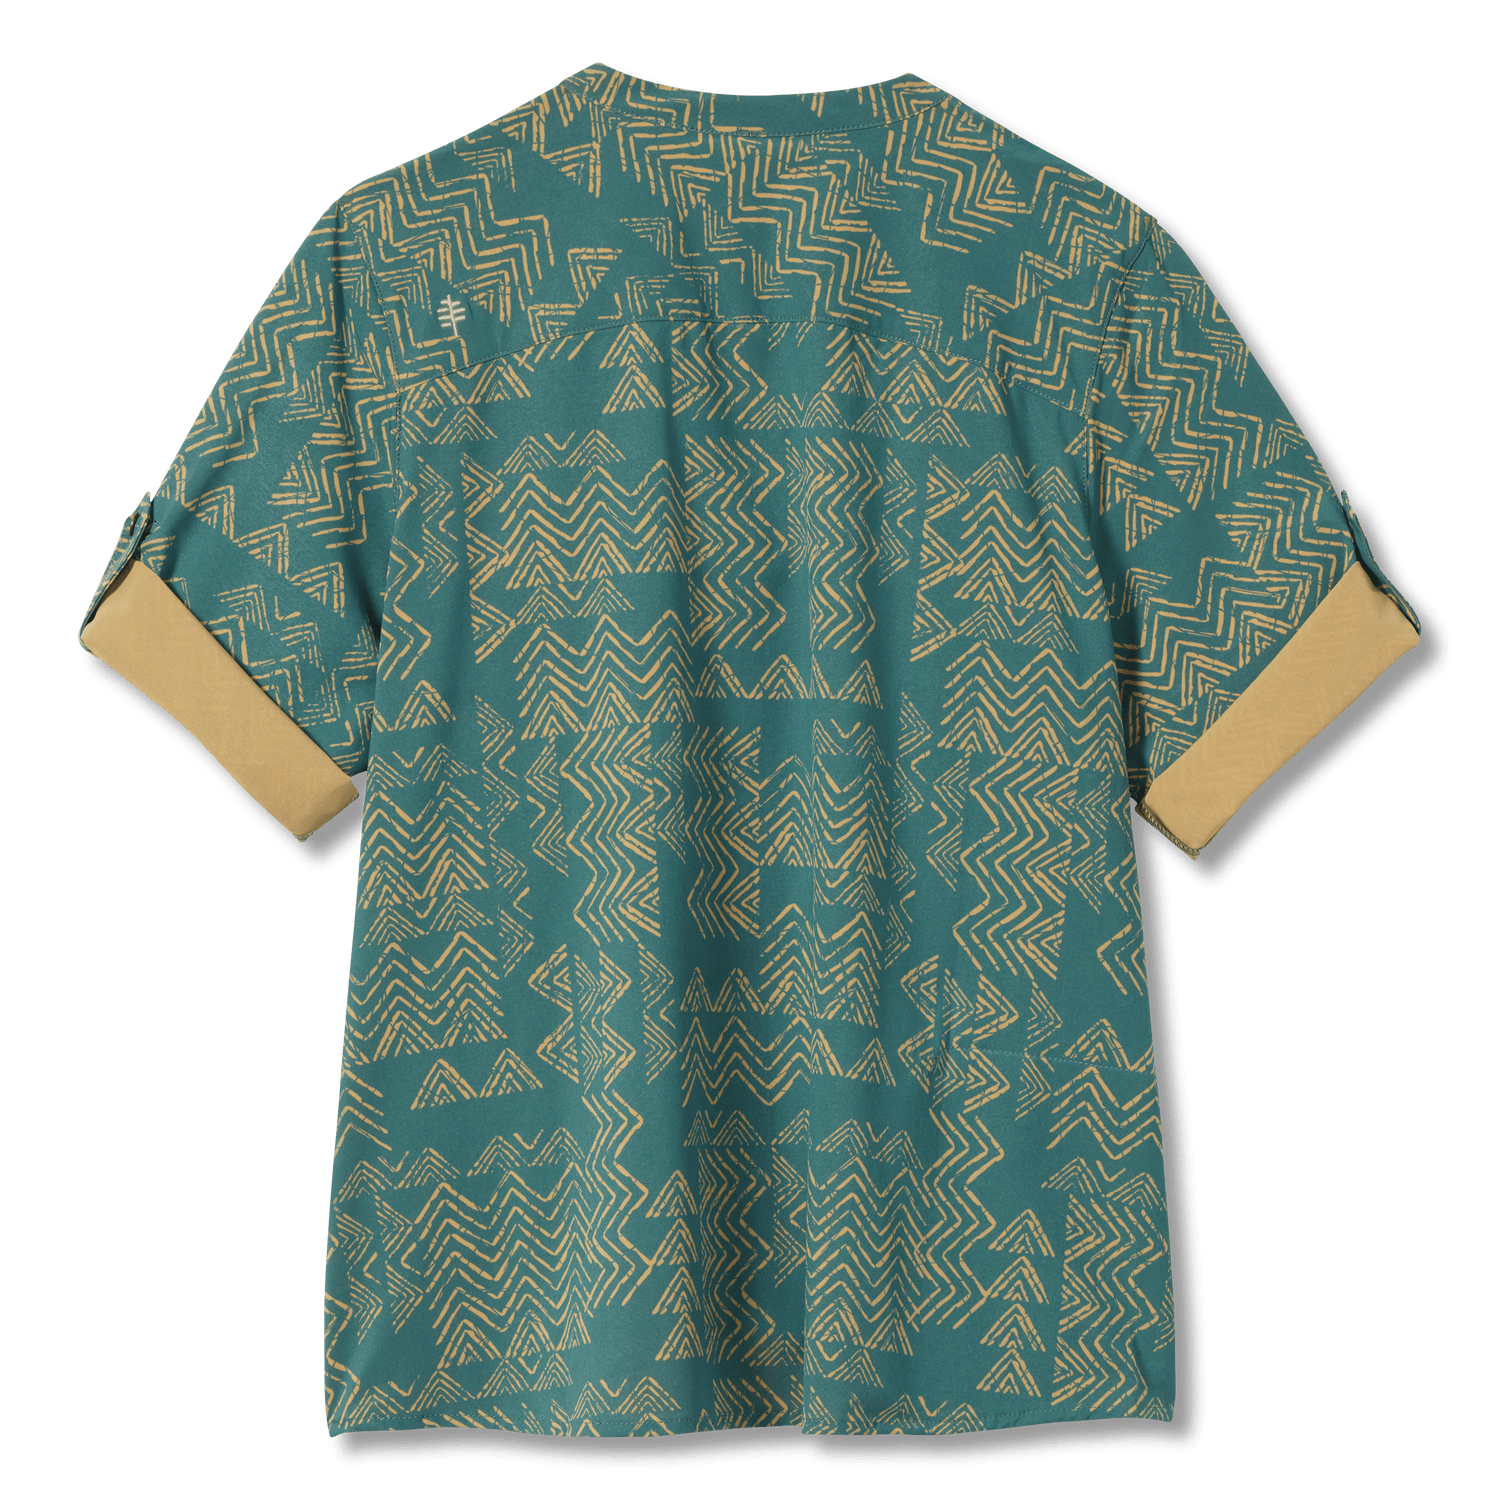 Royal Robbins W's Spotless Traveler S/S - Recycled polyester Sea Pine Acadia Pt Shirt